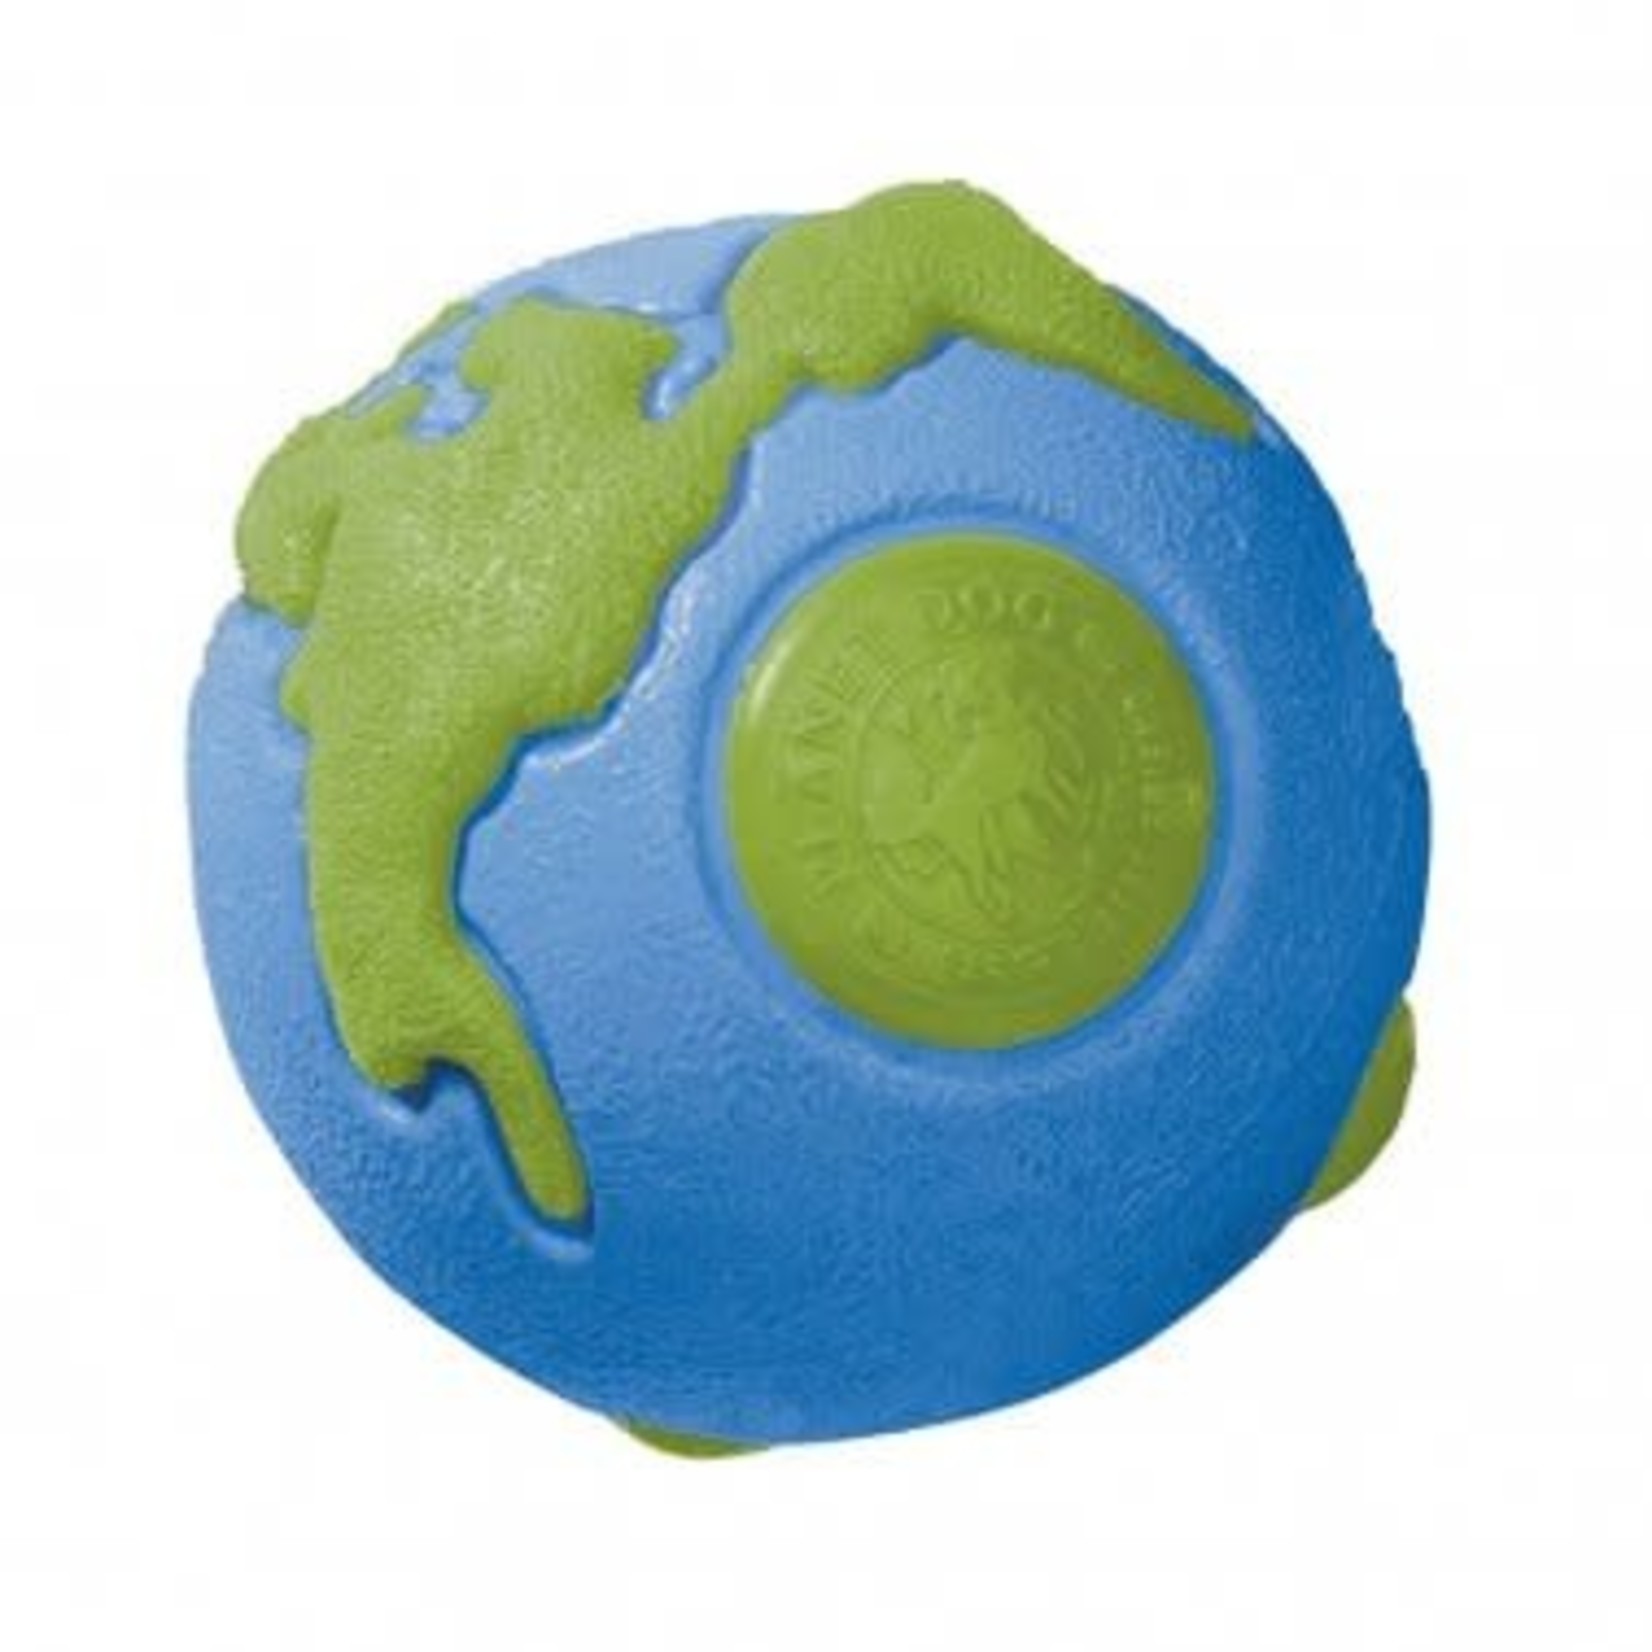 Planet Dog Planet Dog Orbee Ball Blue/Green Medium